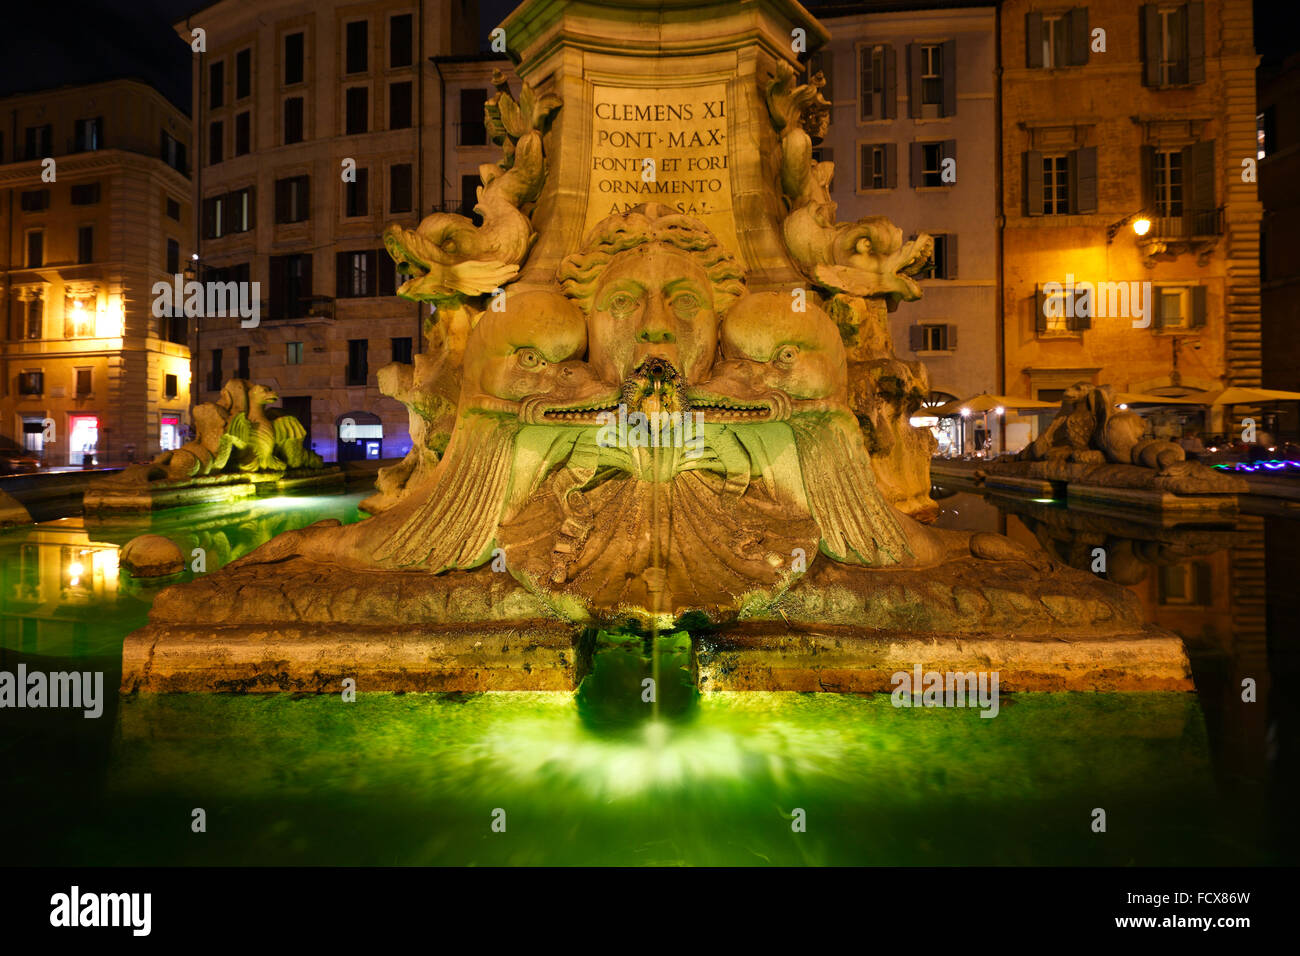 The Fontana del Pantheon on Piazza della Rotonda, Rome, Italy Stock Photo